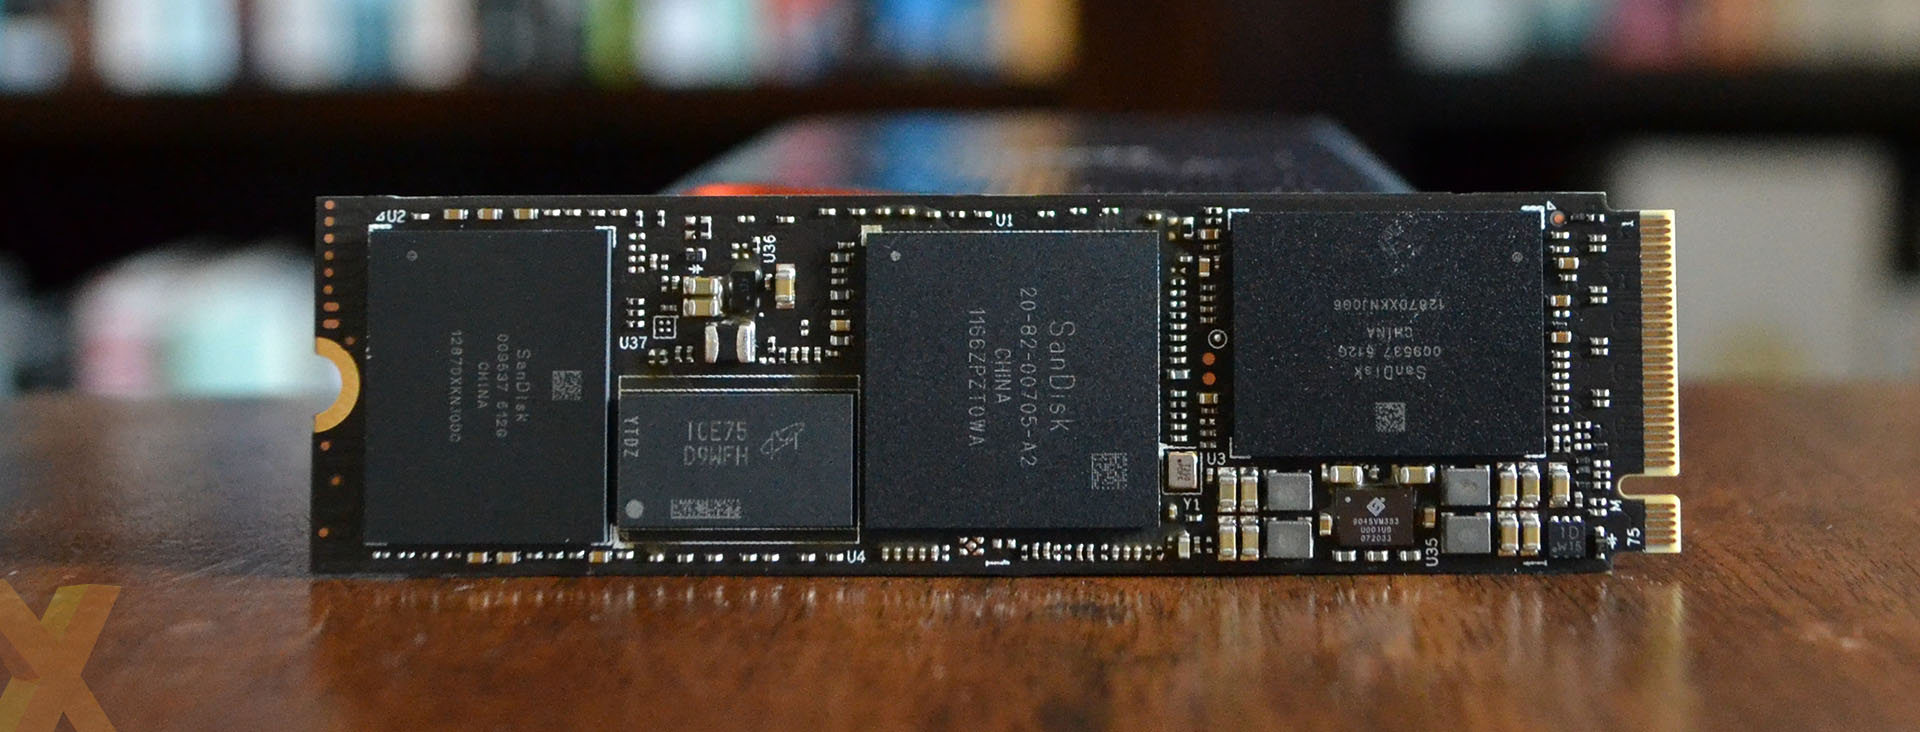 Review: WD Red SN700 SSD (1TB) - Storage - HEXUS.net